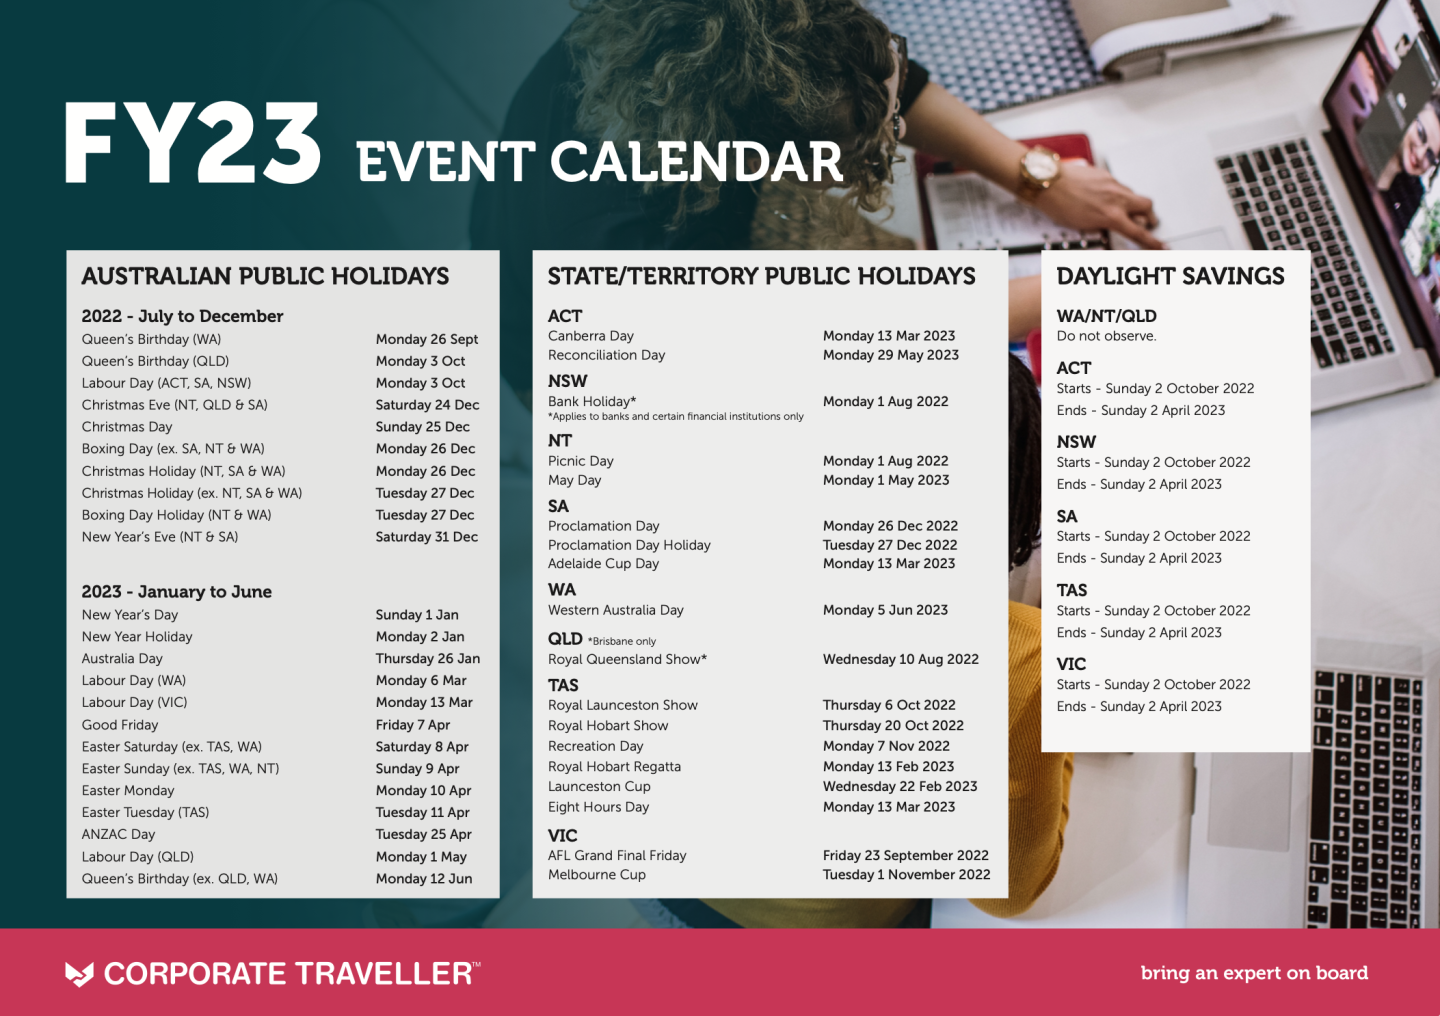 2022/23 events calendar